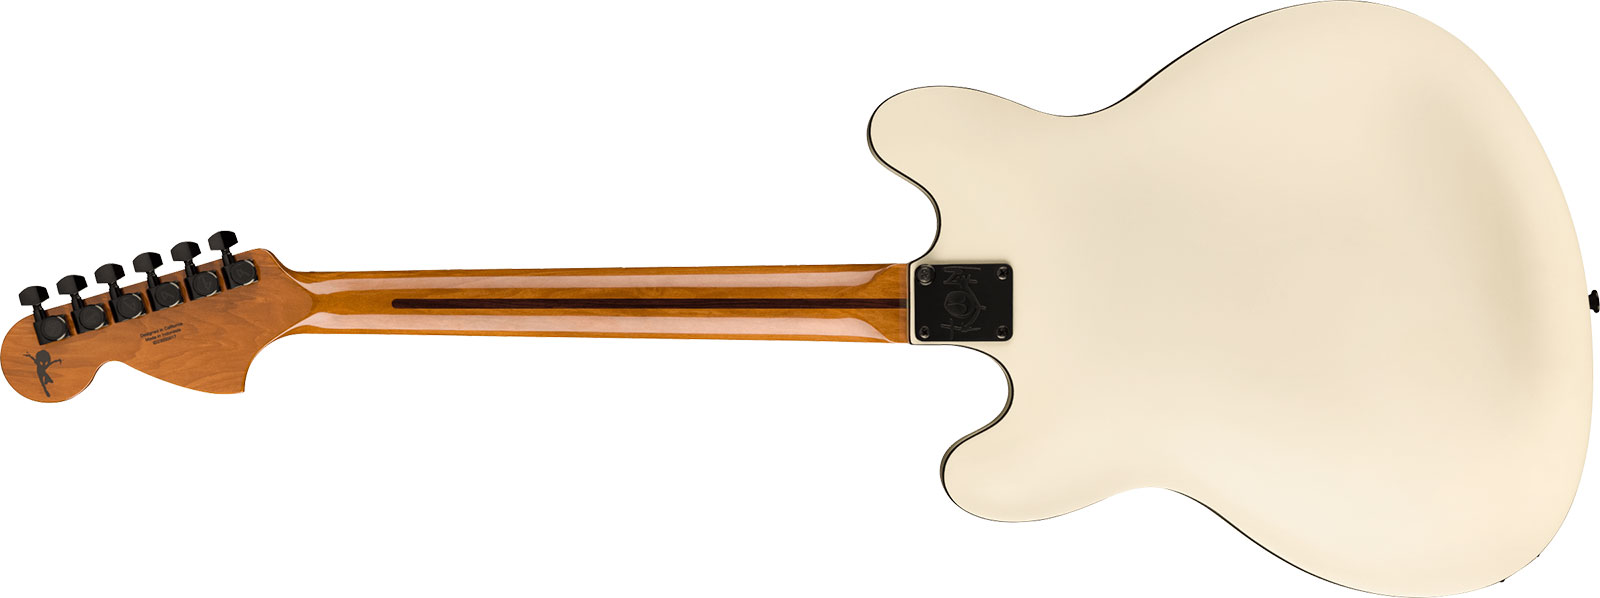 Fender Tom Delonge Starcaster Signature 1h Seymour Duncan Ht Rw - Satin Olympic White - Semi-hollow electric guitar - Variation 1